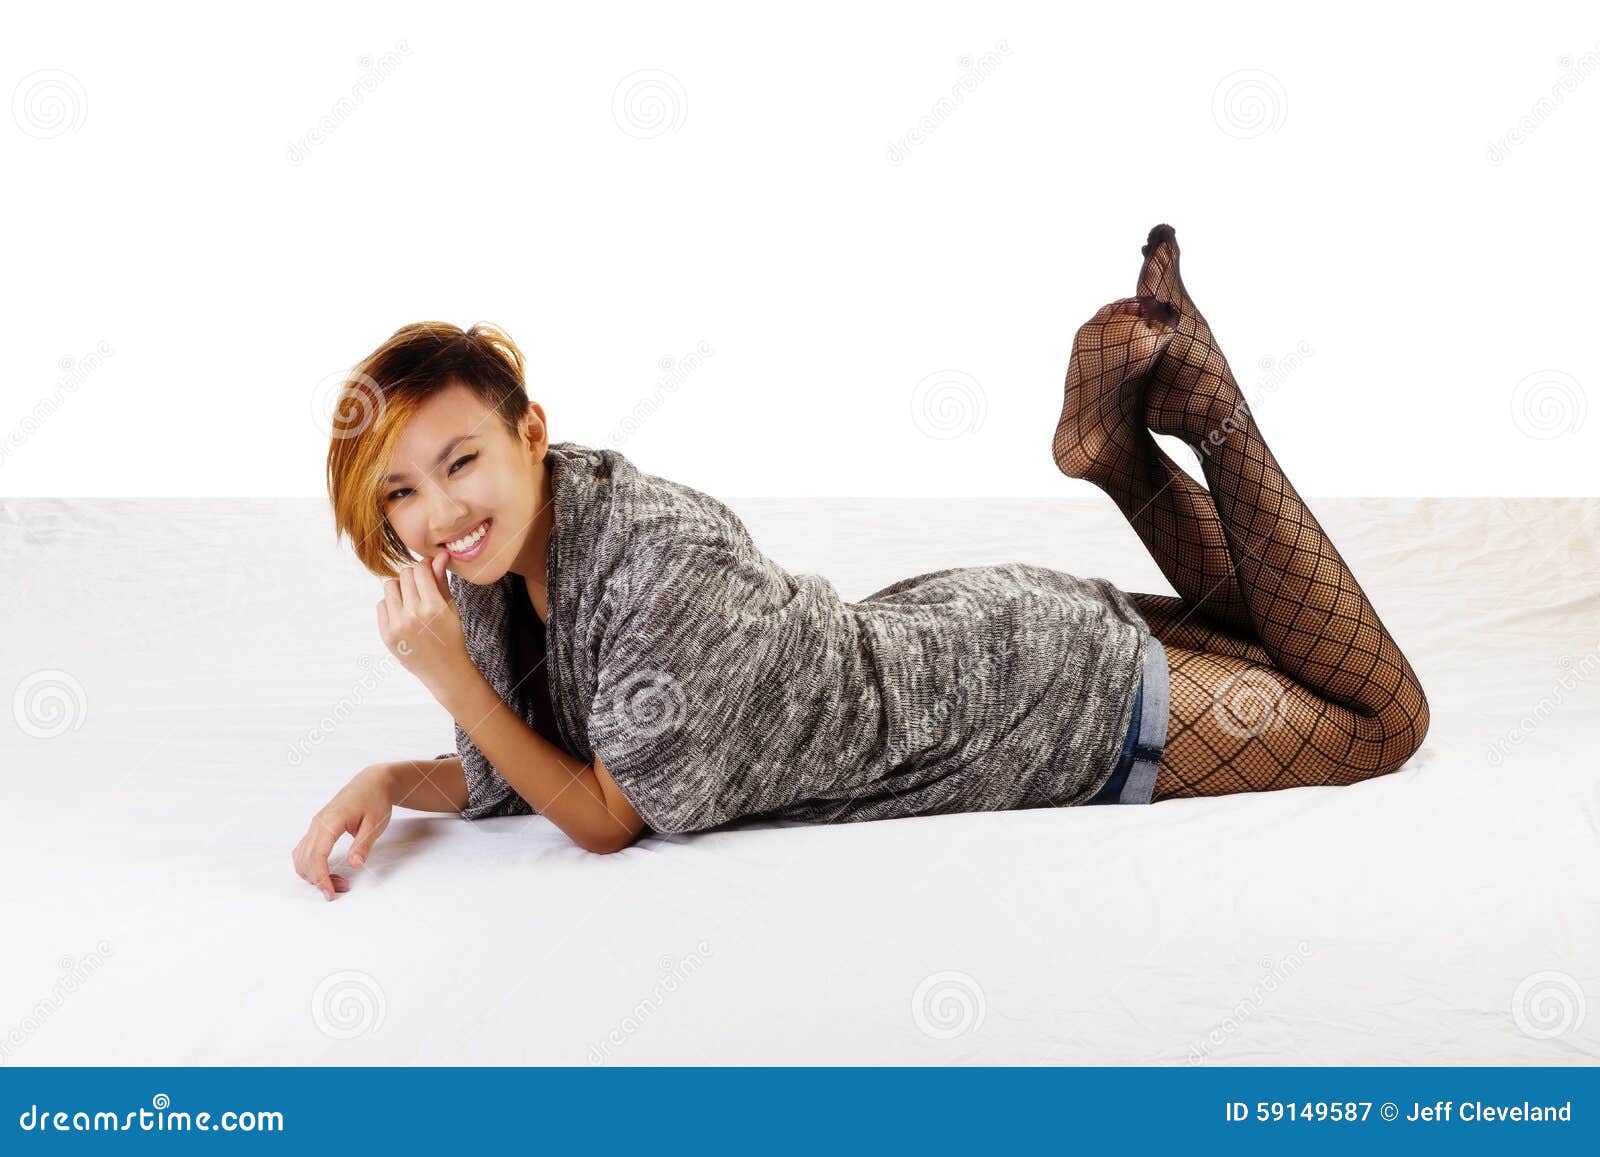 asian fishnet in stocking woman - Asian Fishnet Stockings ...